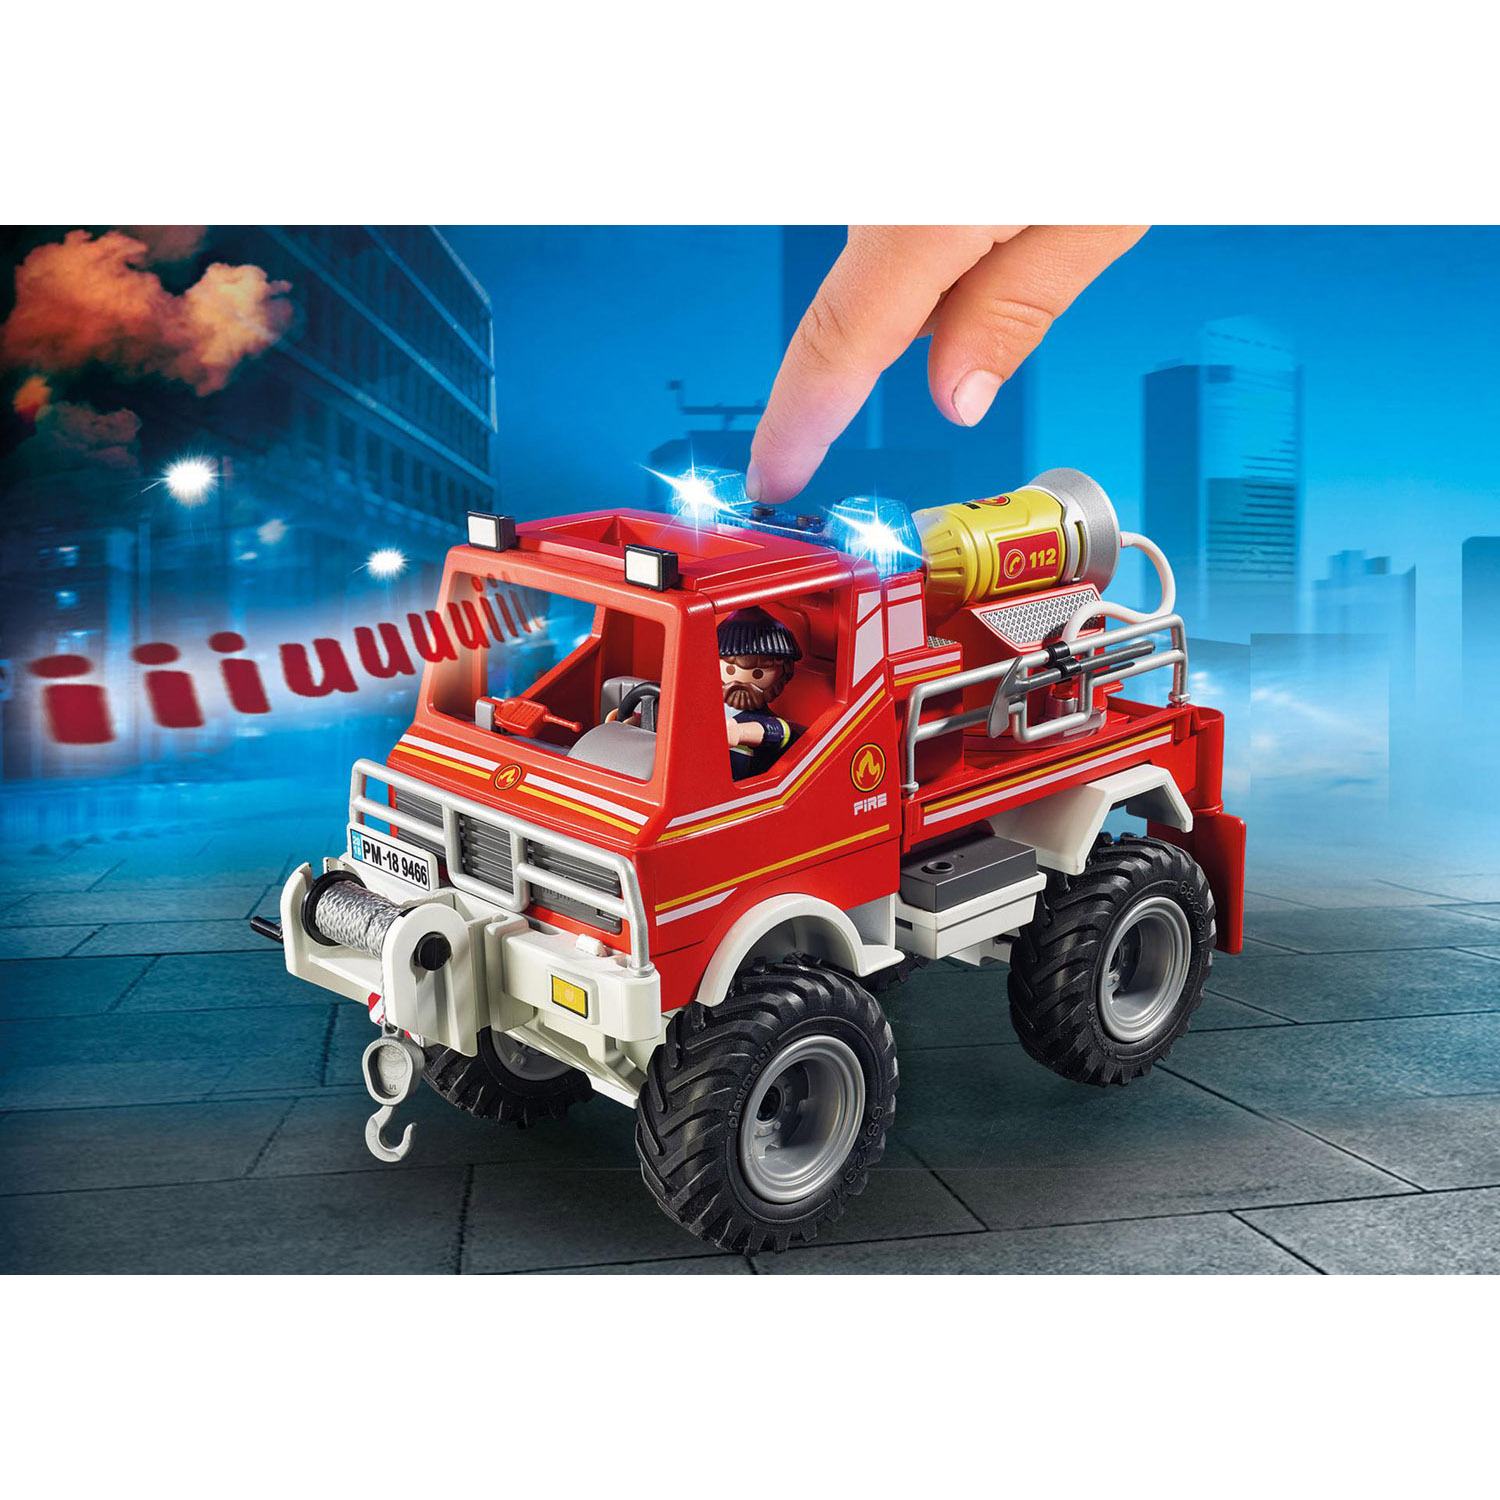 Playmobil Конструктор Пожарная машина 9466pm - фото 4